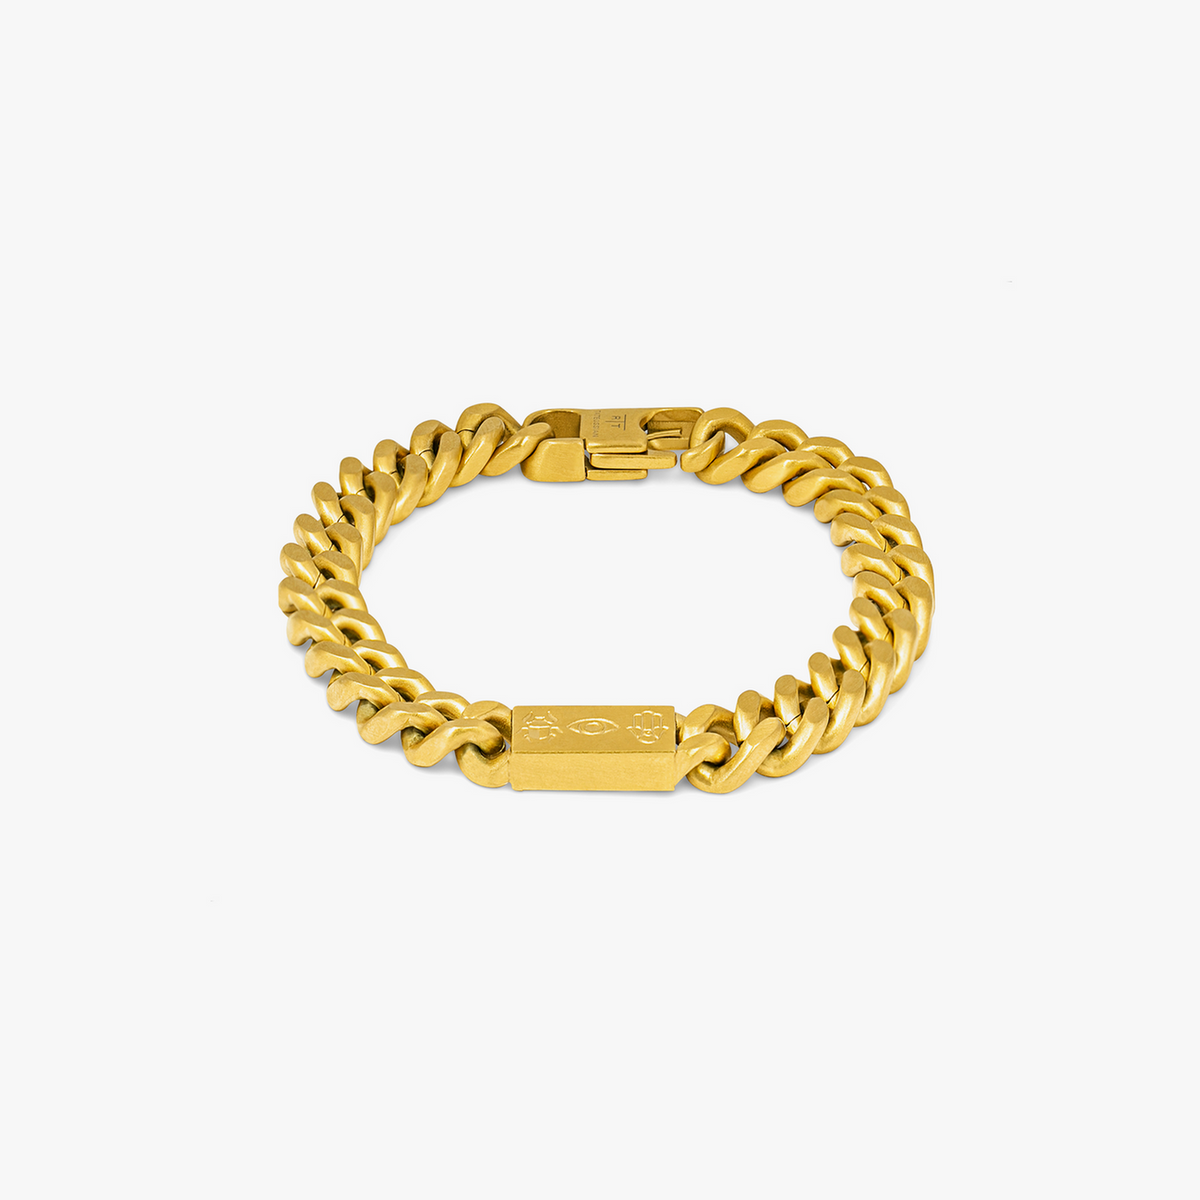 Meccanico Amulet Bracelet in Yellow Gold Plated Stainless Steel-Bracelets-Tateossian-Medium-Cufflinks.com.sg